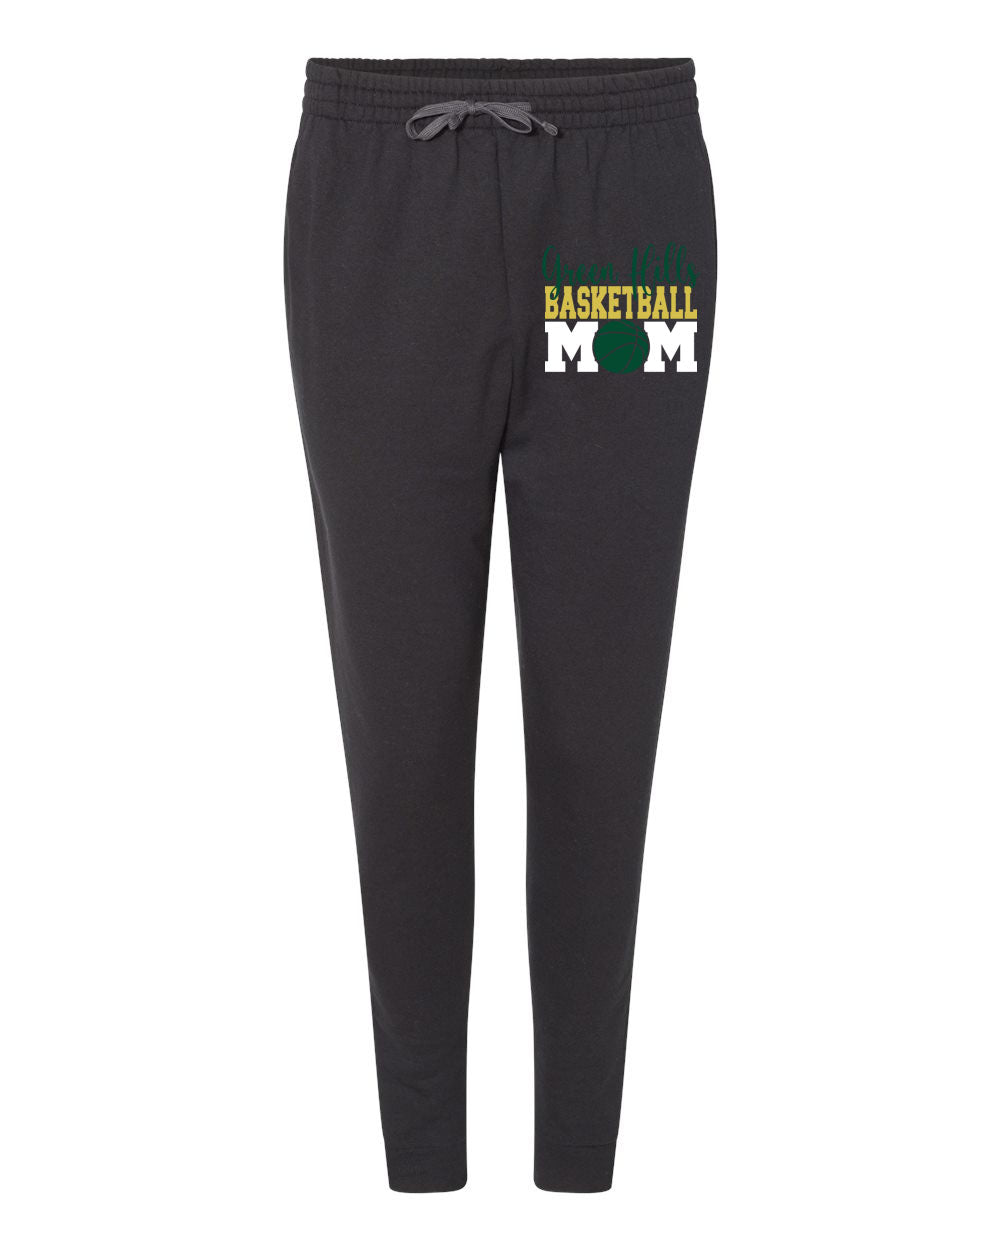 Green Hills Basketball design 1 Sweatpants